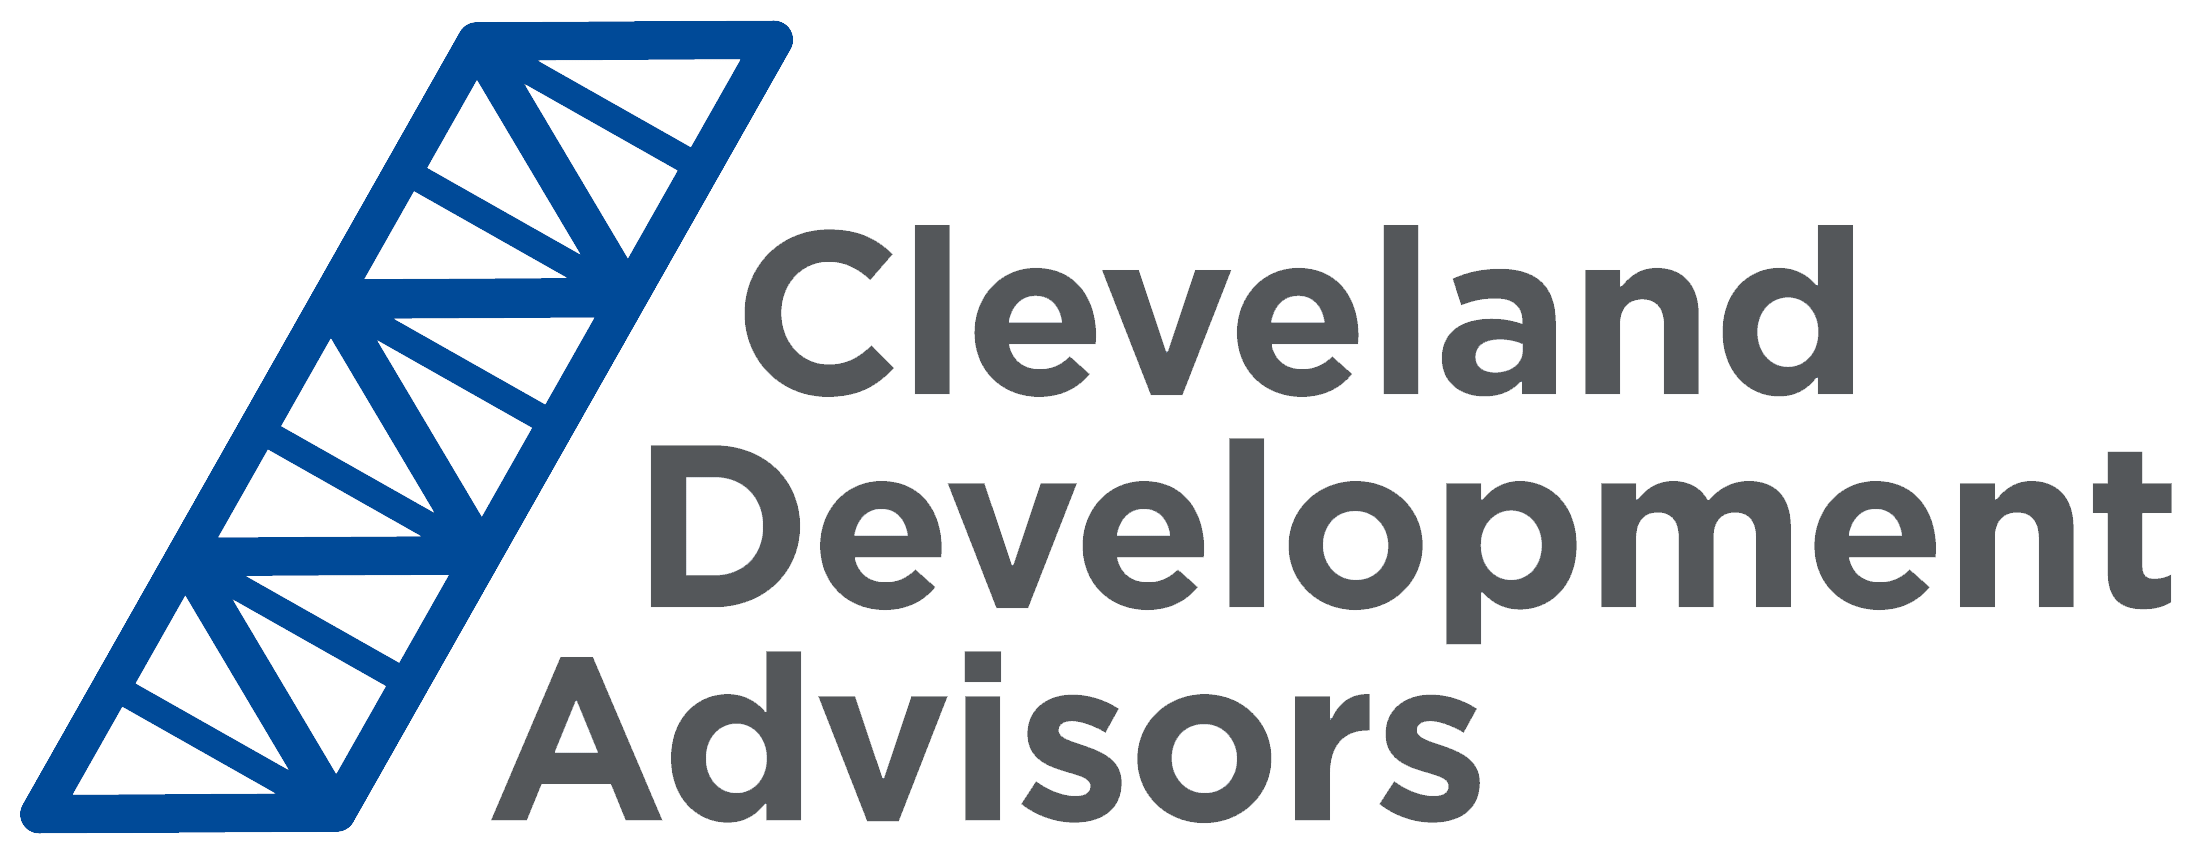 Cleveland Development Advisors logo